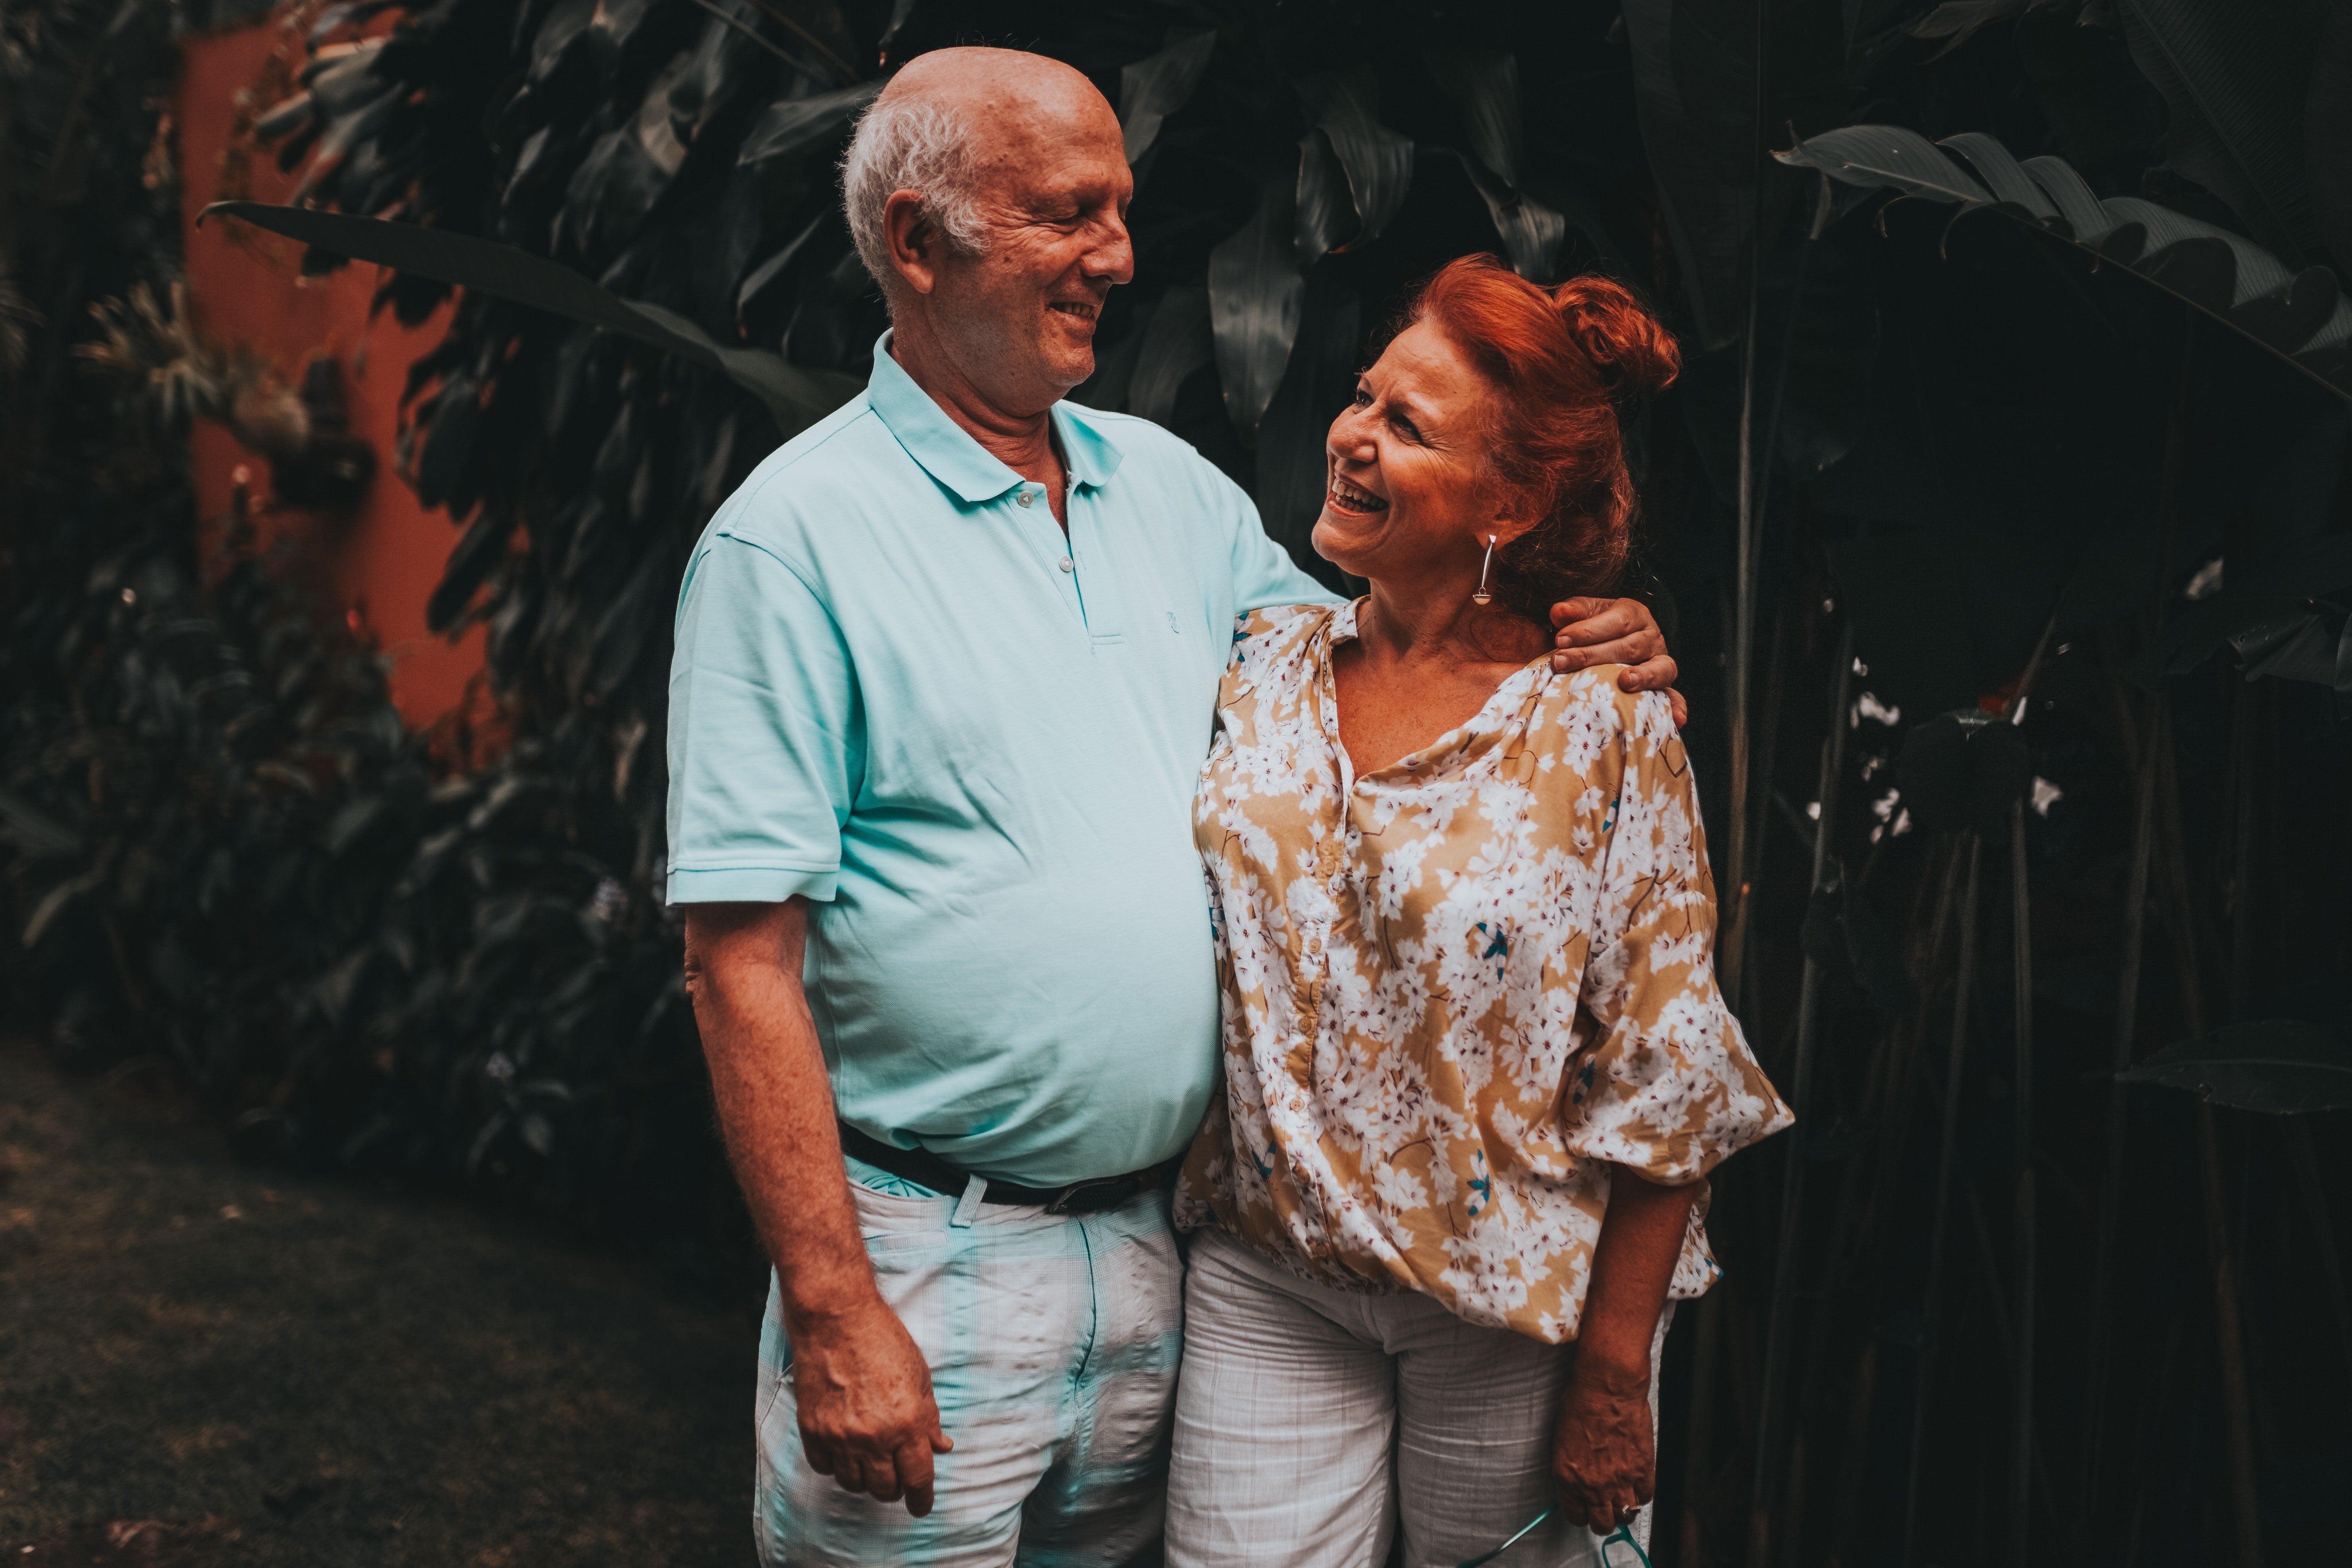 An older couple sharing a joyful moment. | Source: Pexels/ Pixabay